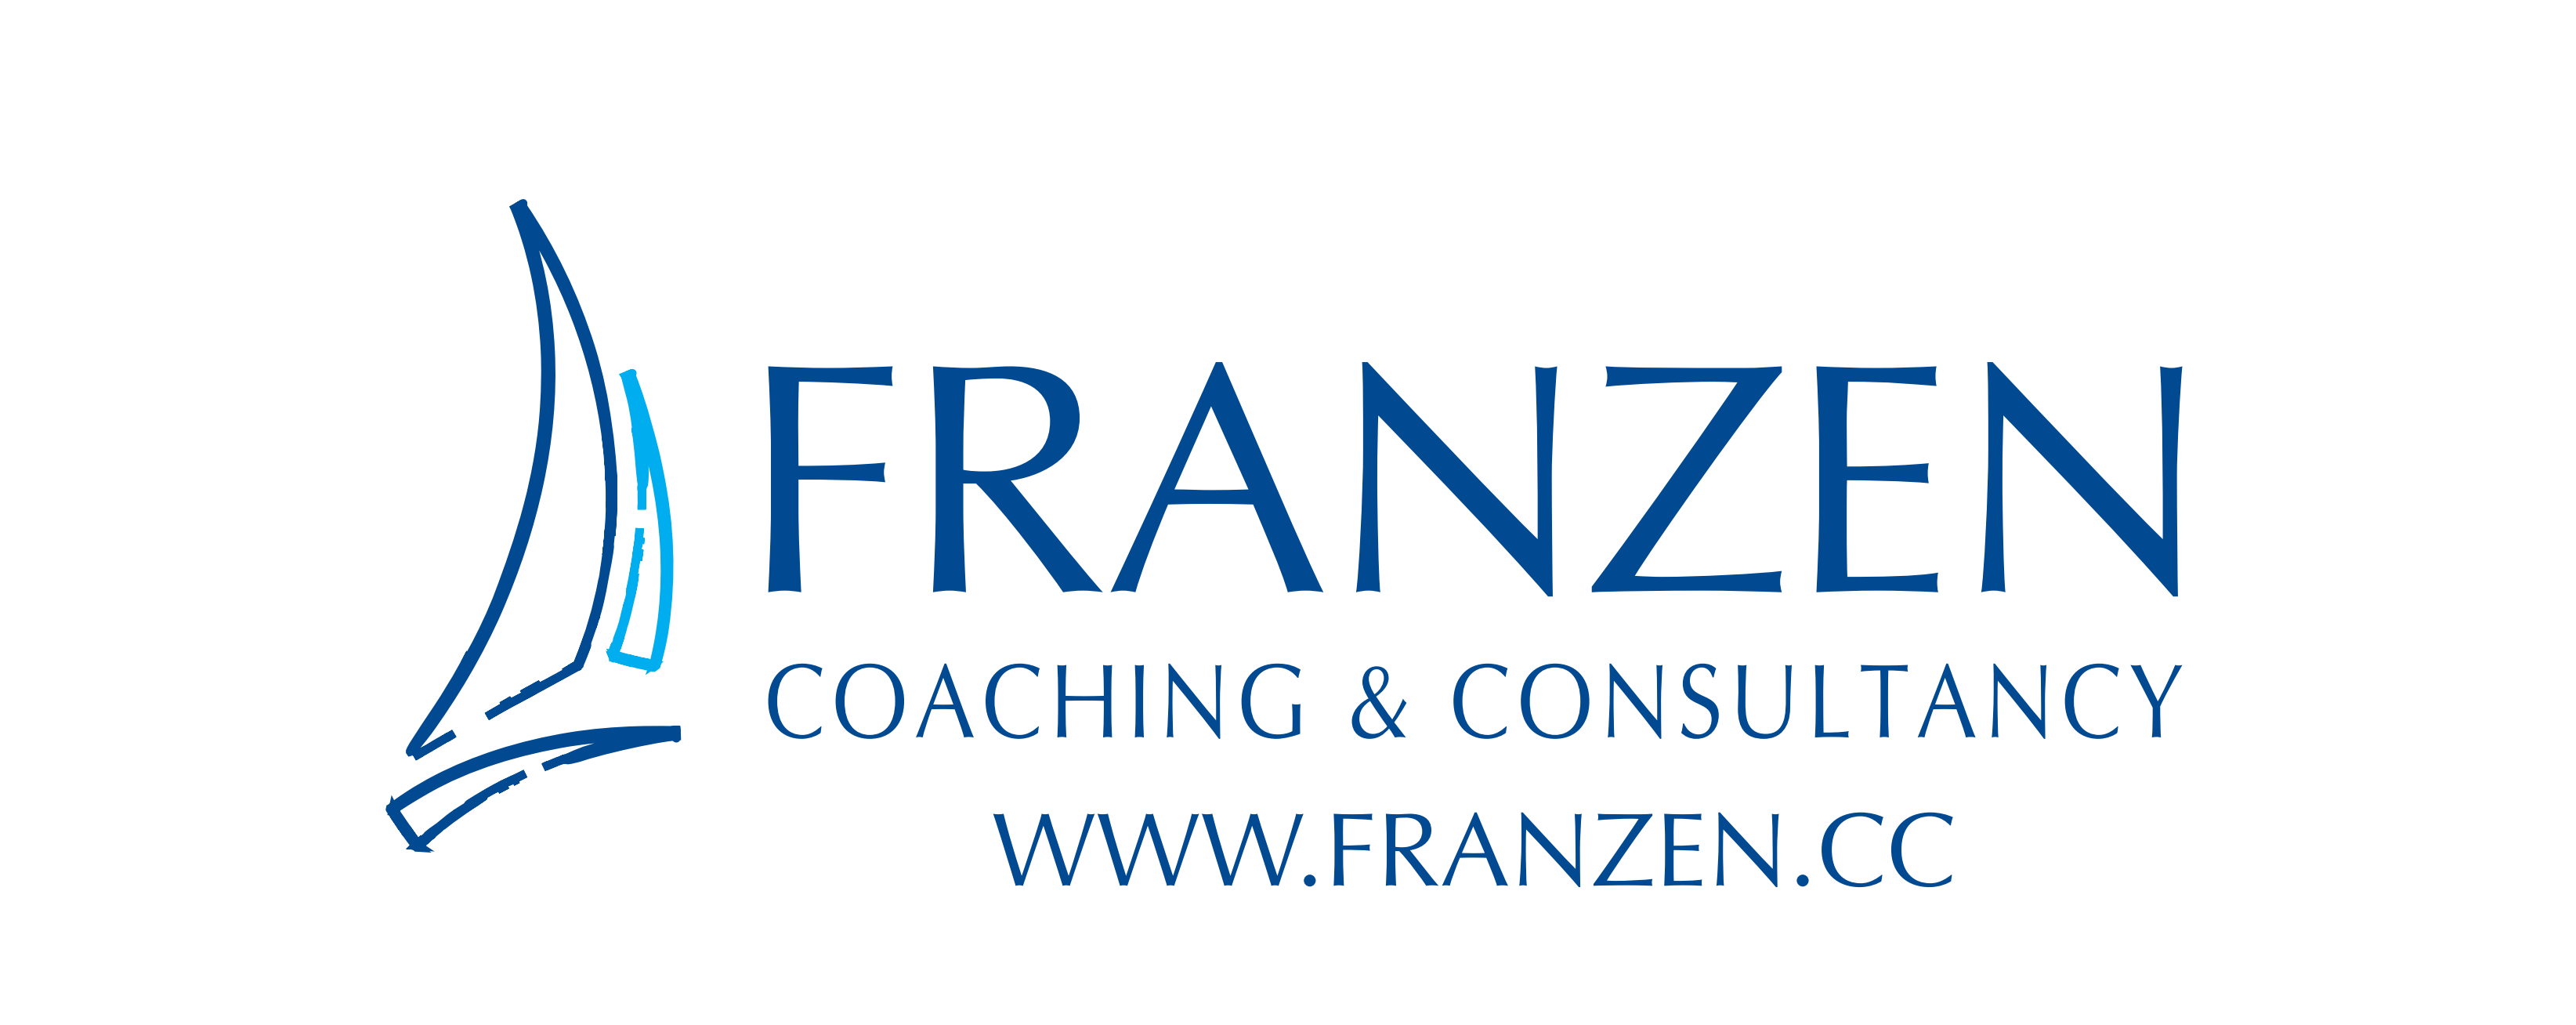 Franzen coaching & consultancy
www.franzen.cc